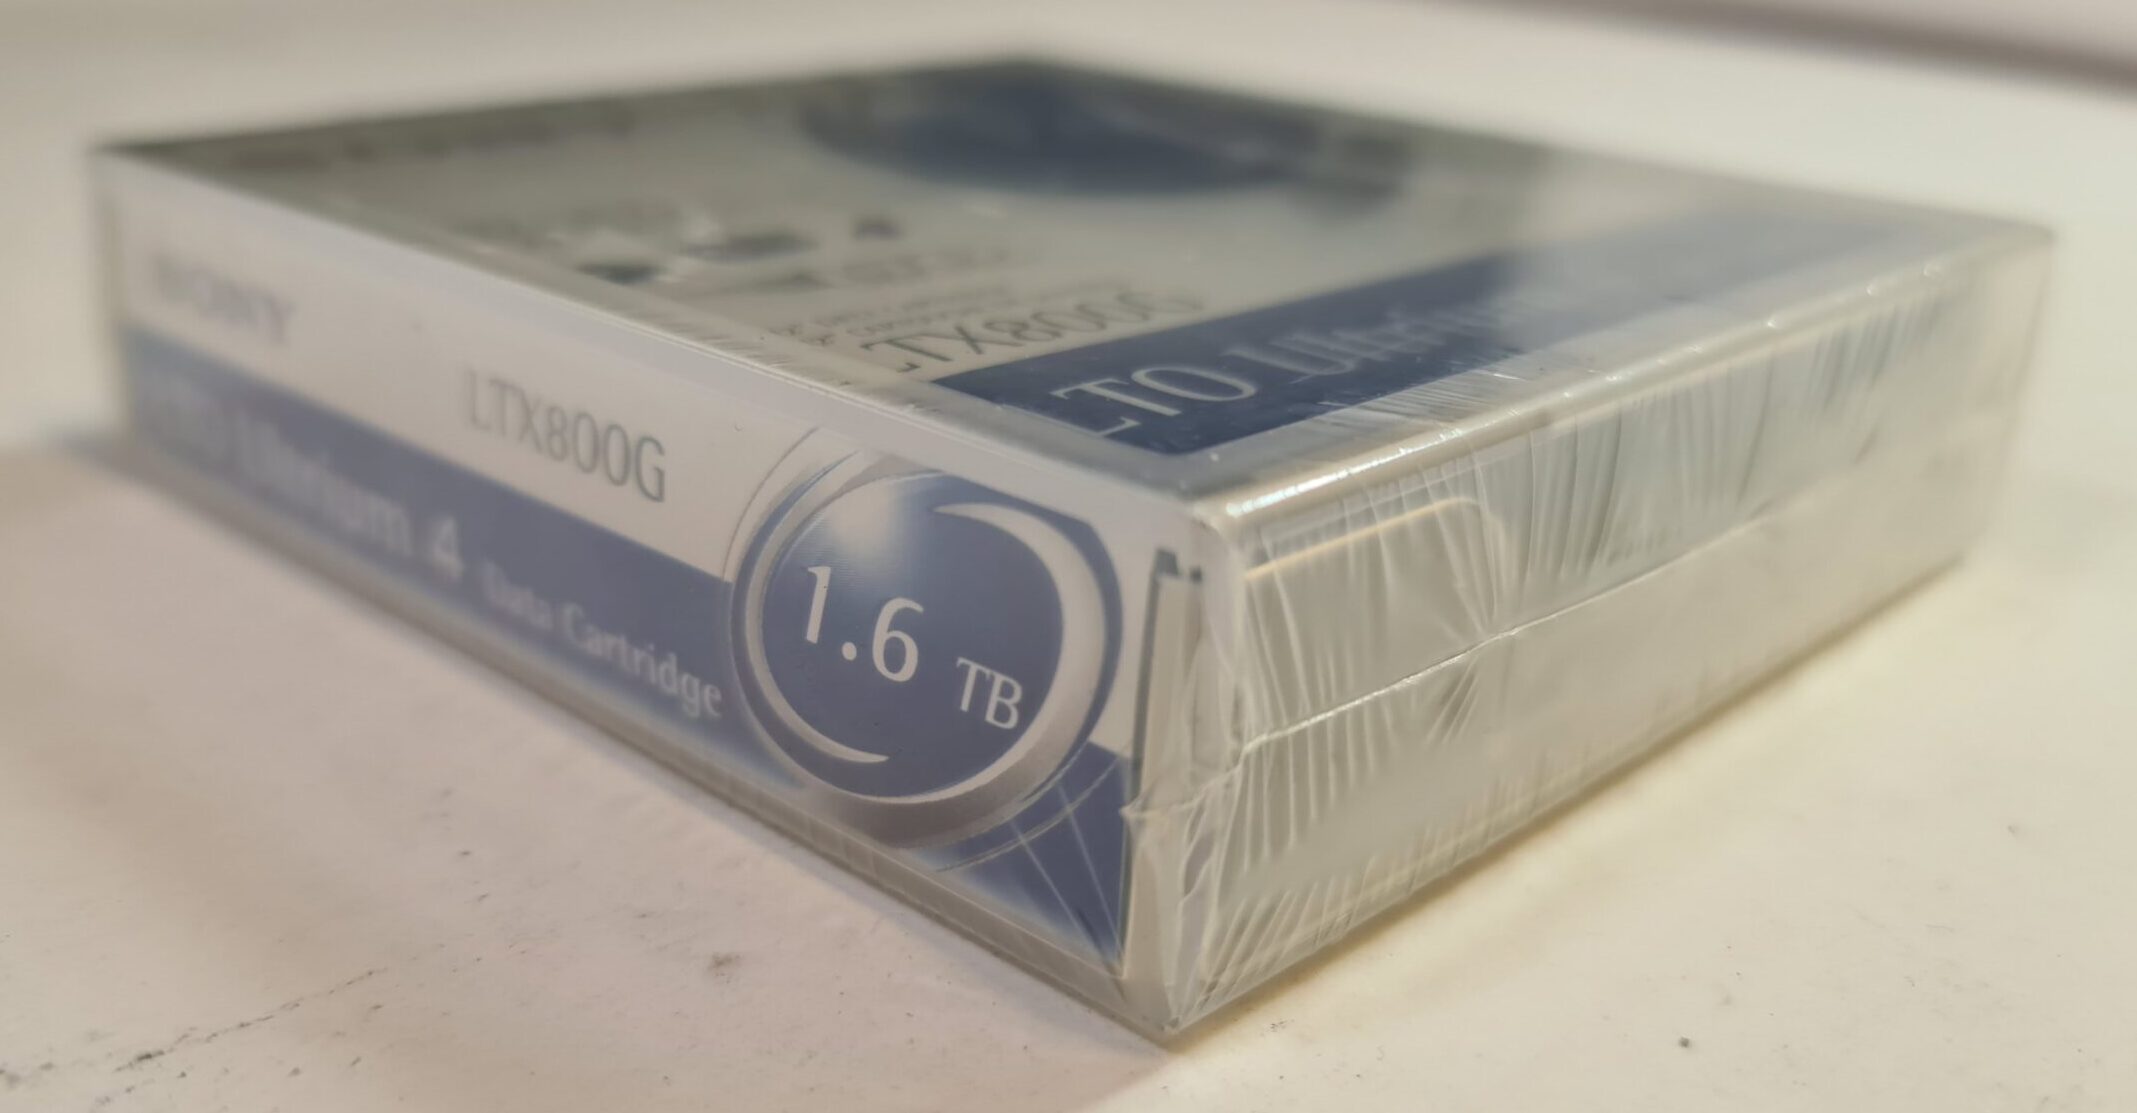 Sony LTX800G - 1.6TB LTO Ultrium 4 Data Cartridge ...